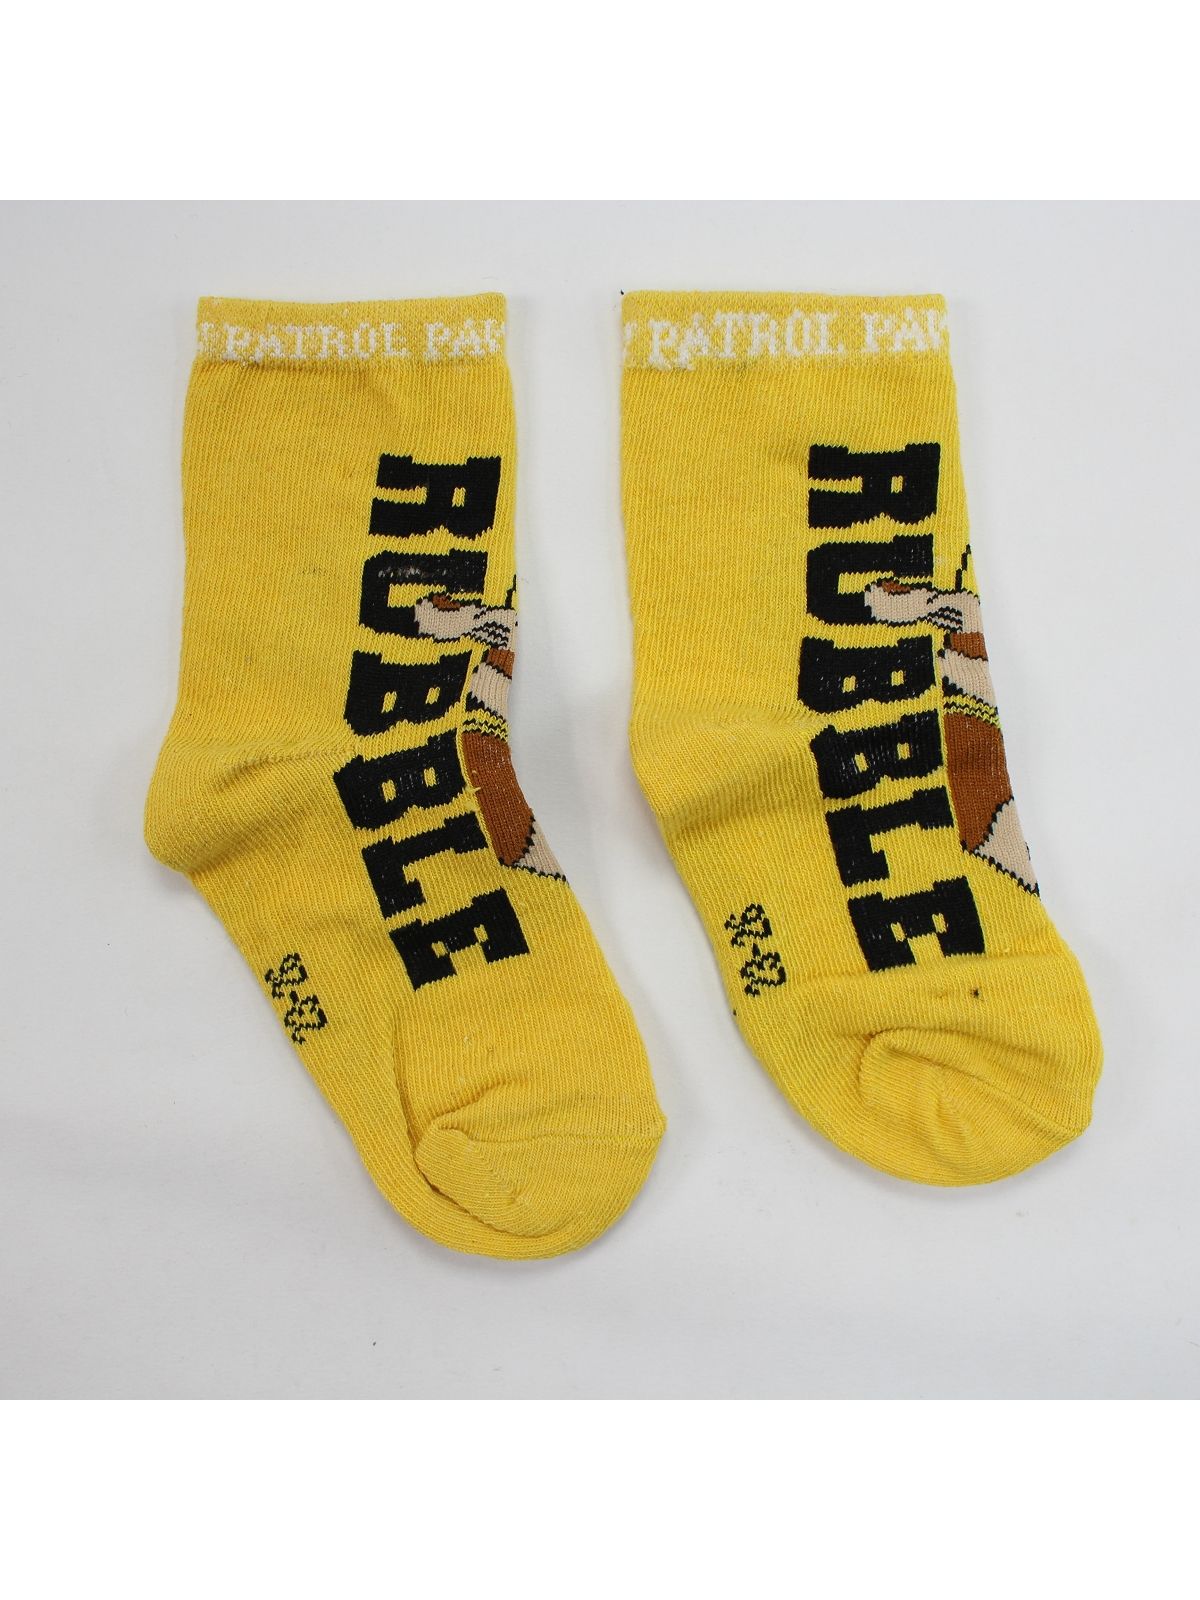 Paw Patrol Pair of socks